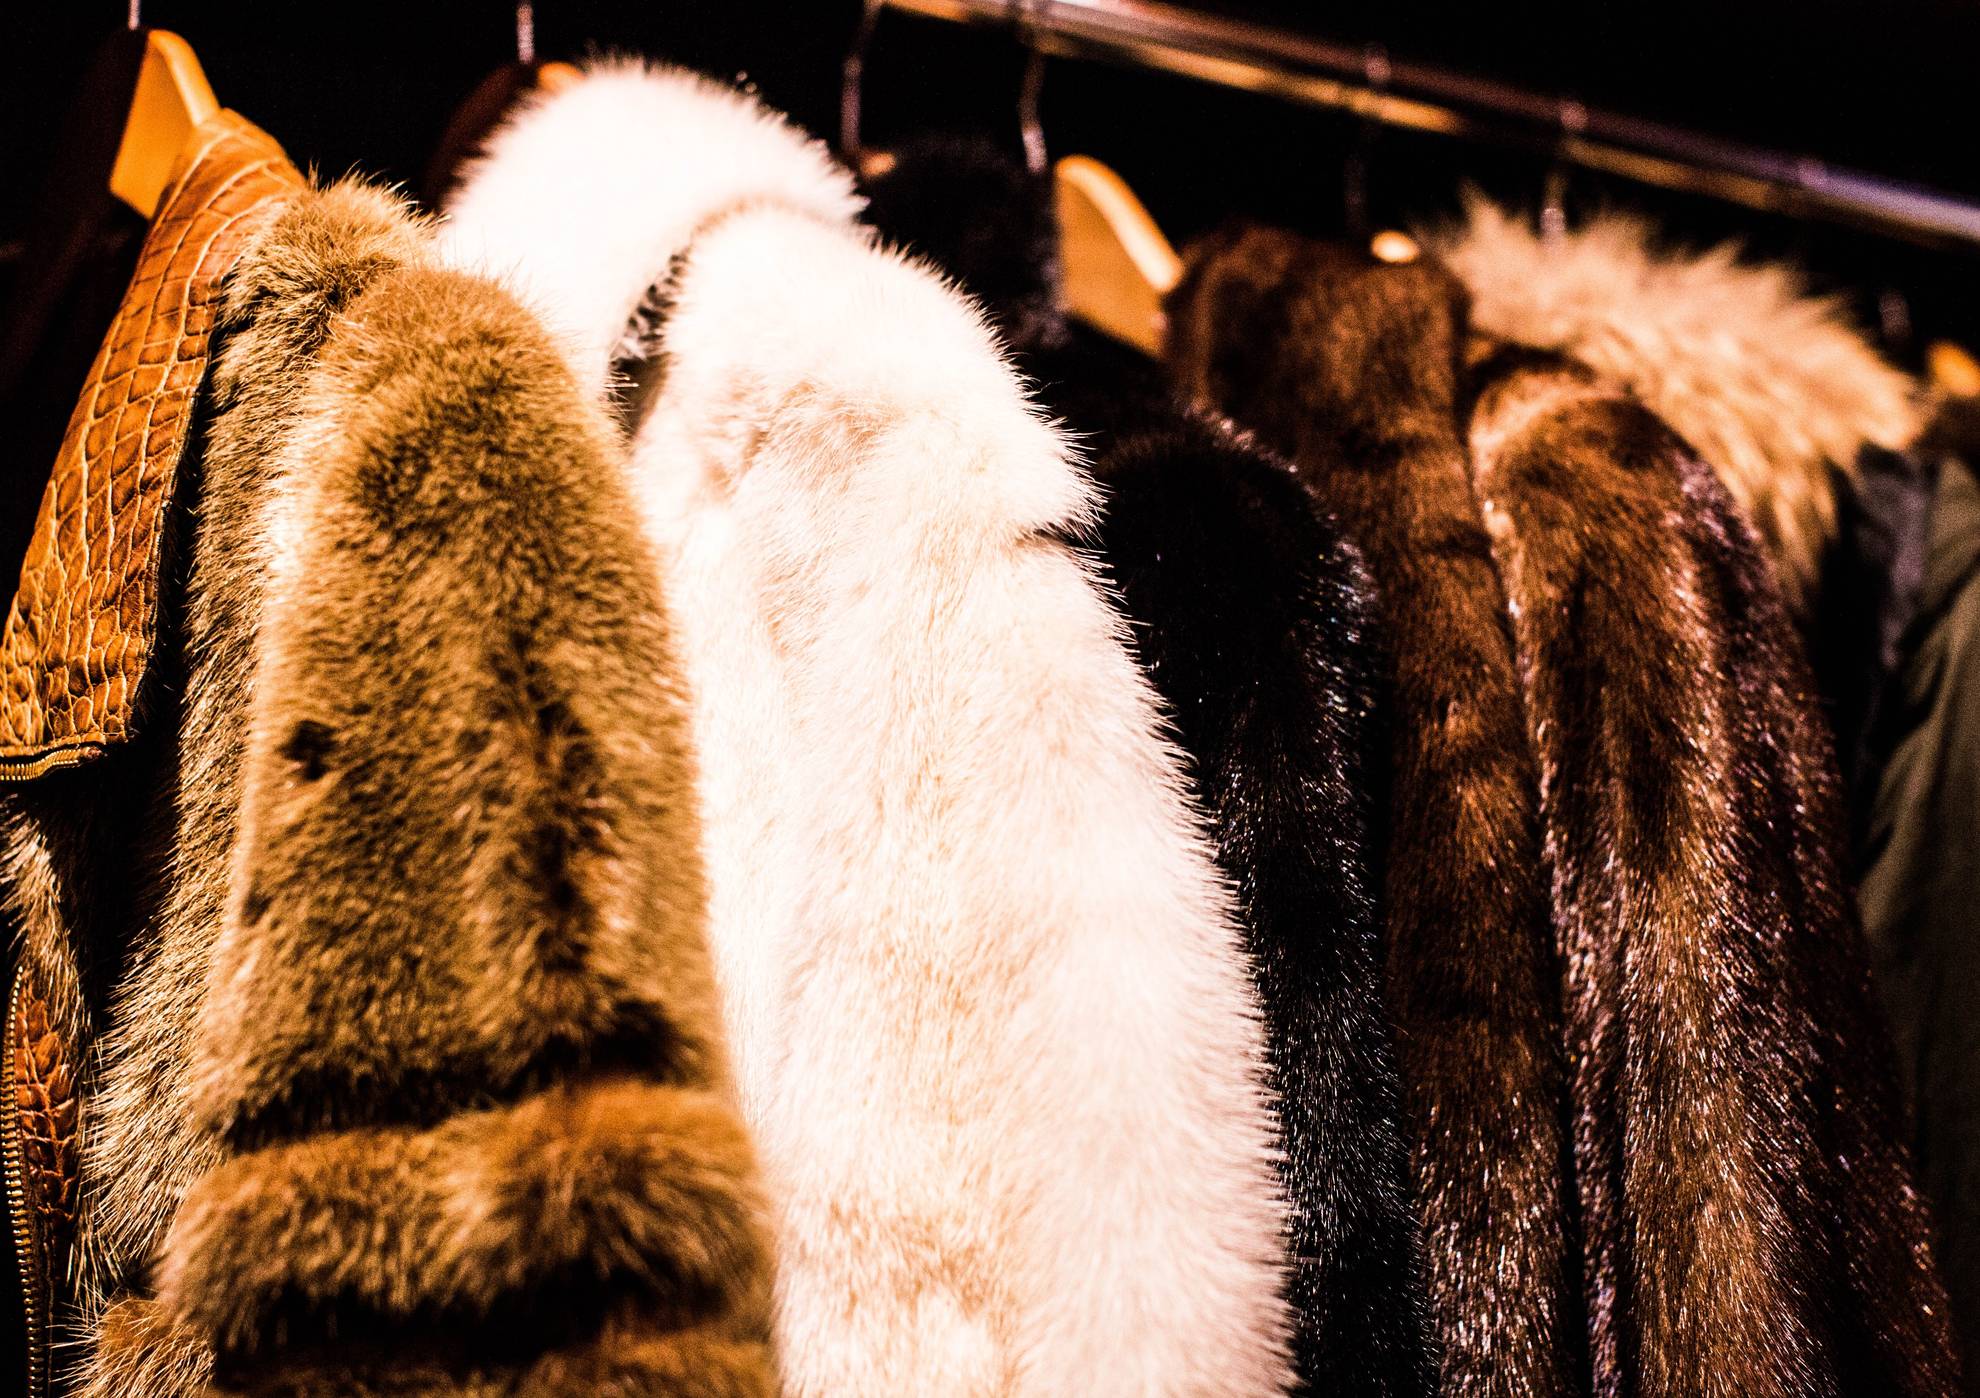 fur coats hanging in wardrobe